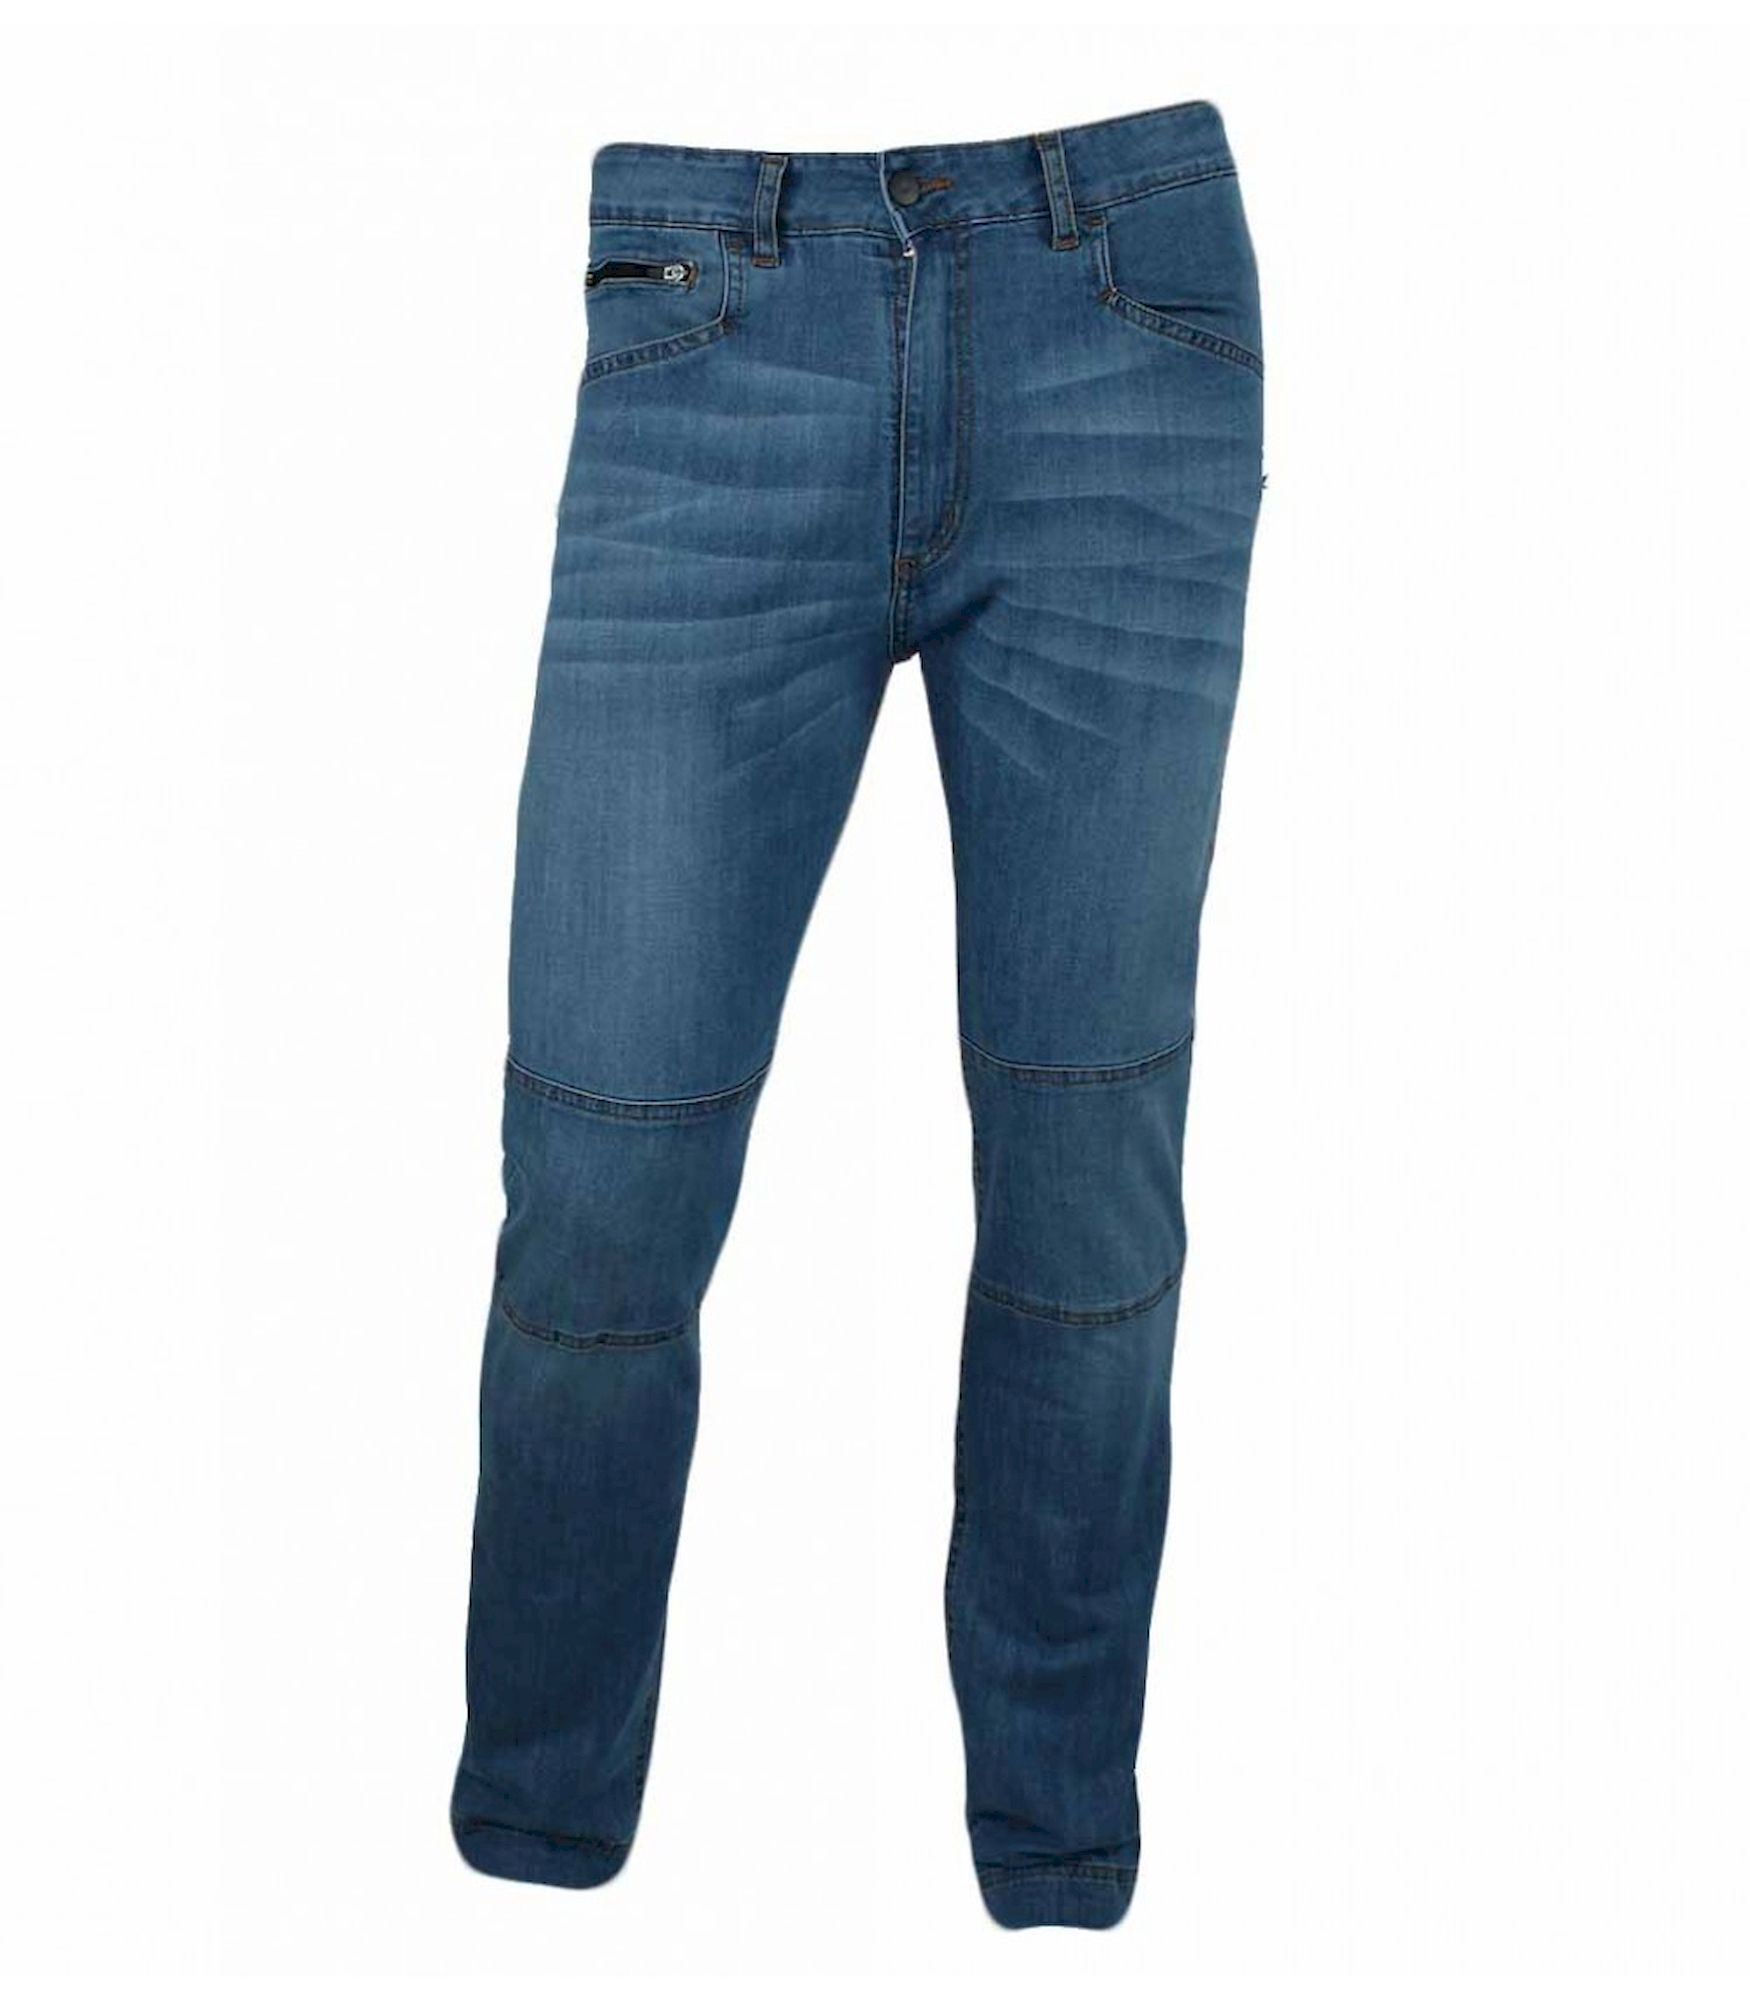 JeansTrack Roca Jeans - Climbing trousers - Men's | Hardloop